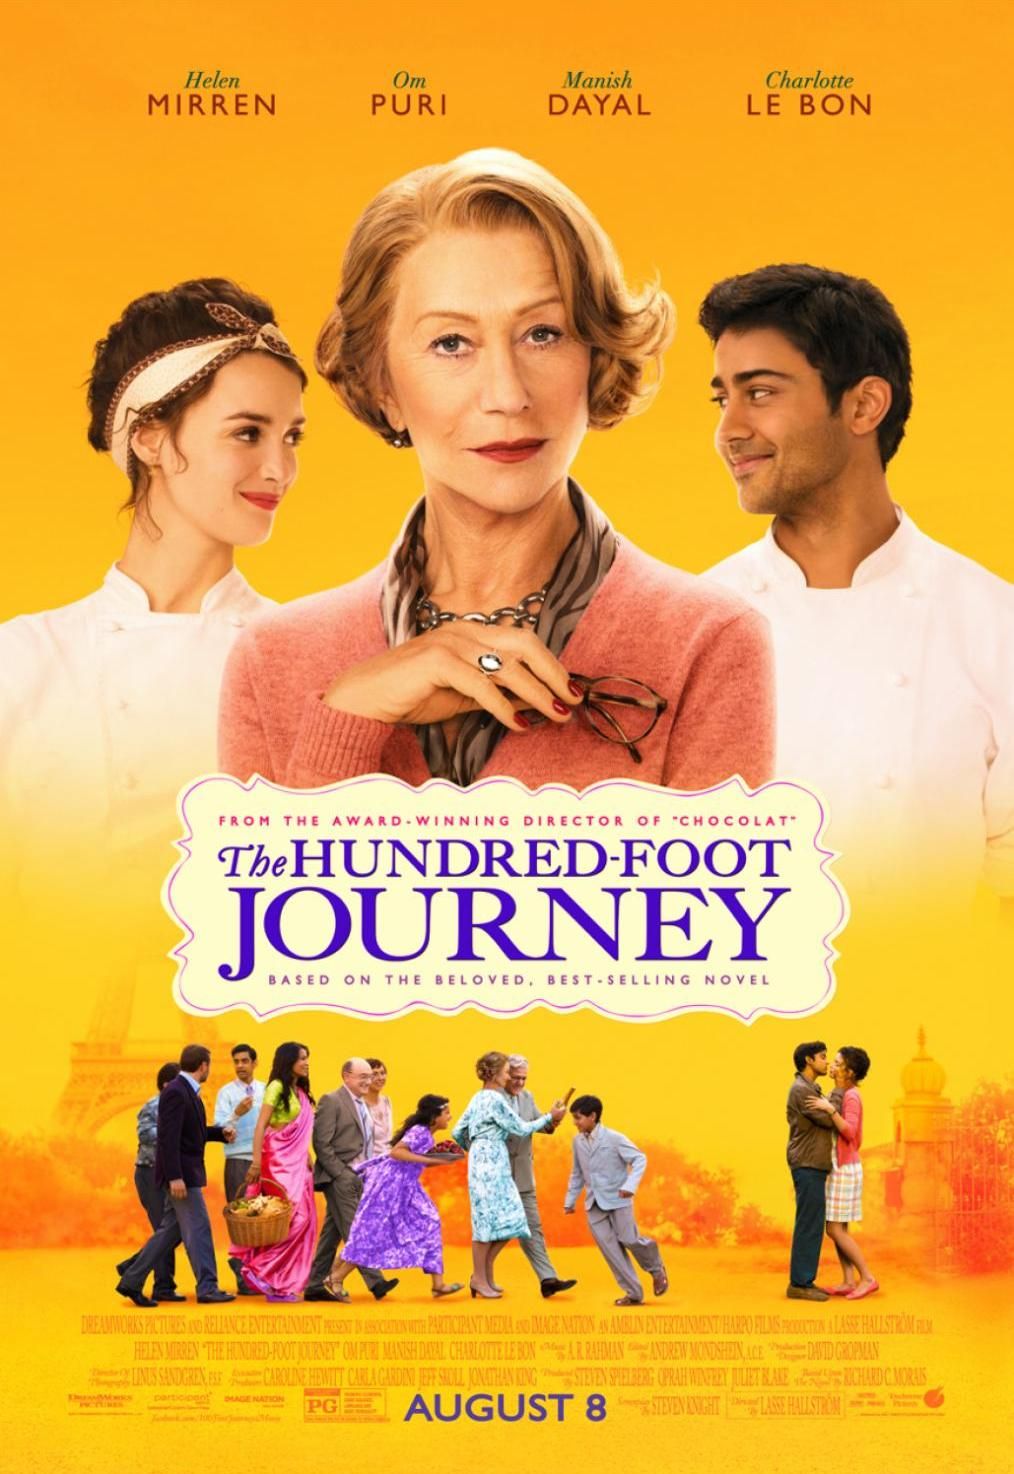 The Hundred-Foot Journey Film Poster